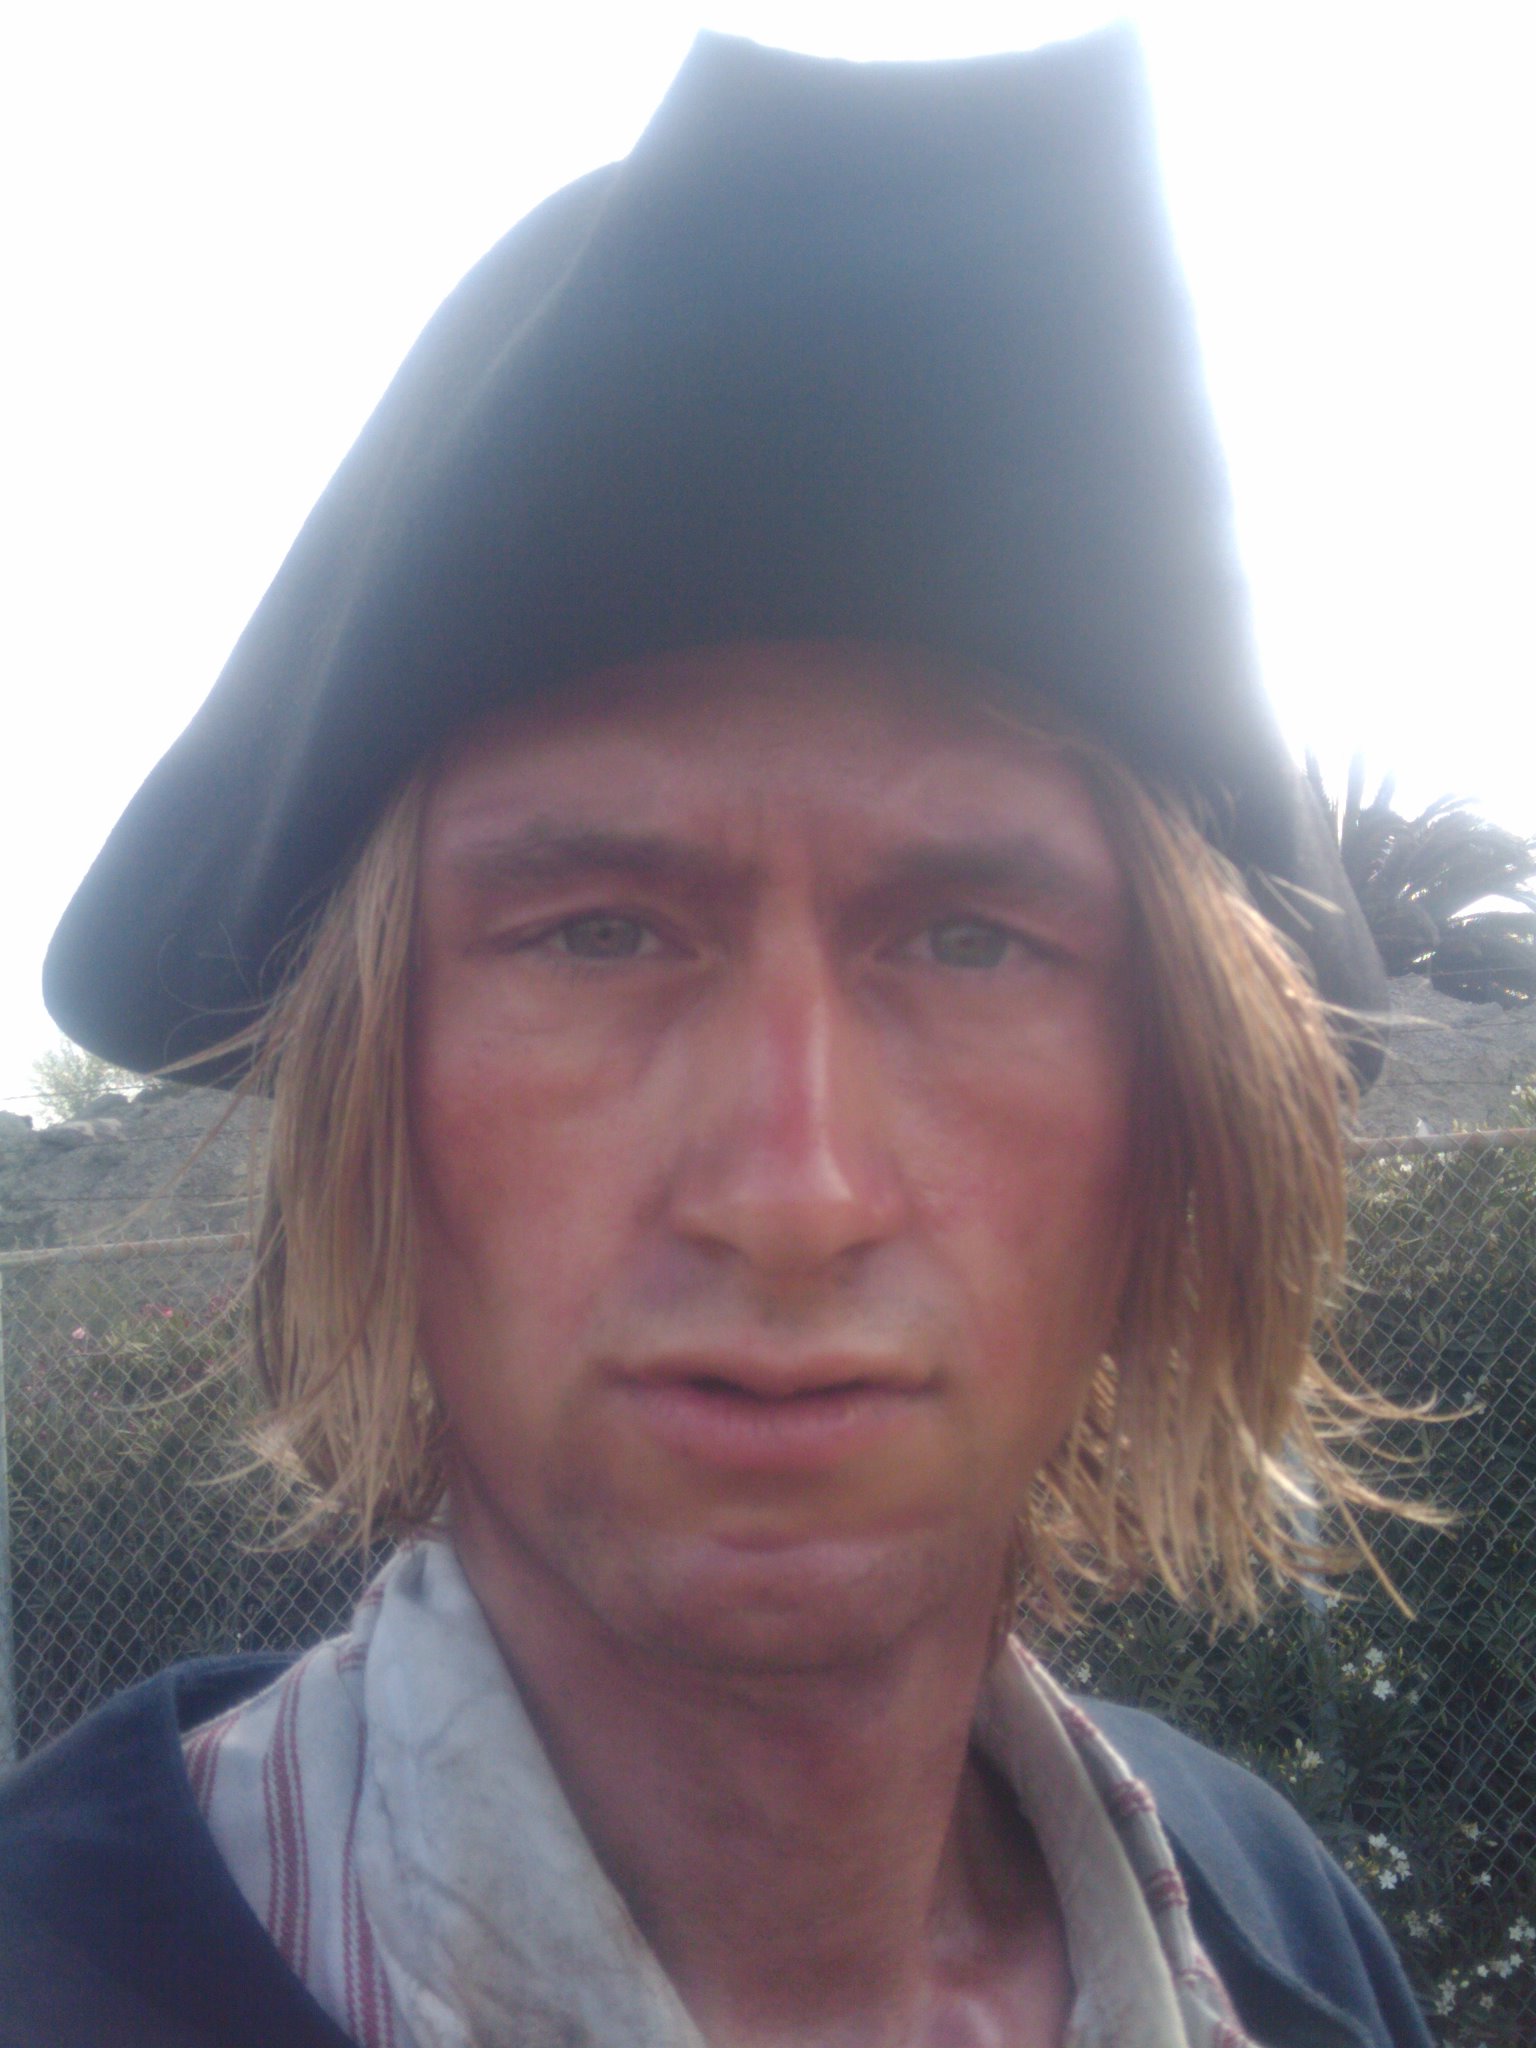 British Soldier - Pirates of the Caribbean 4